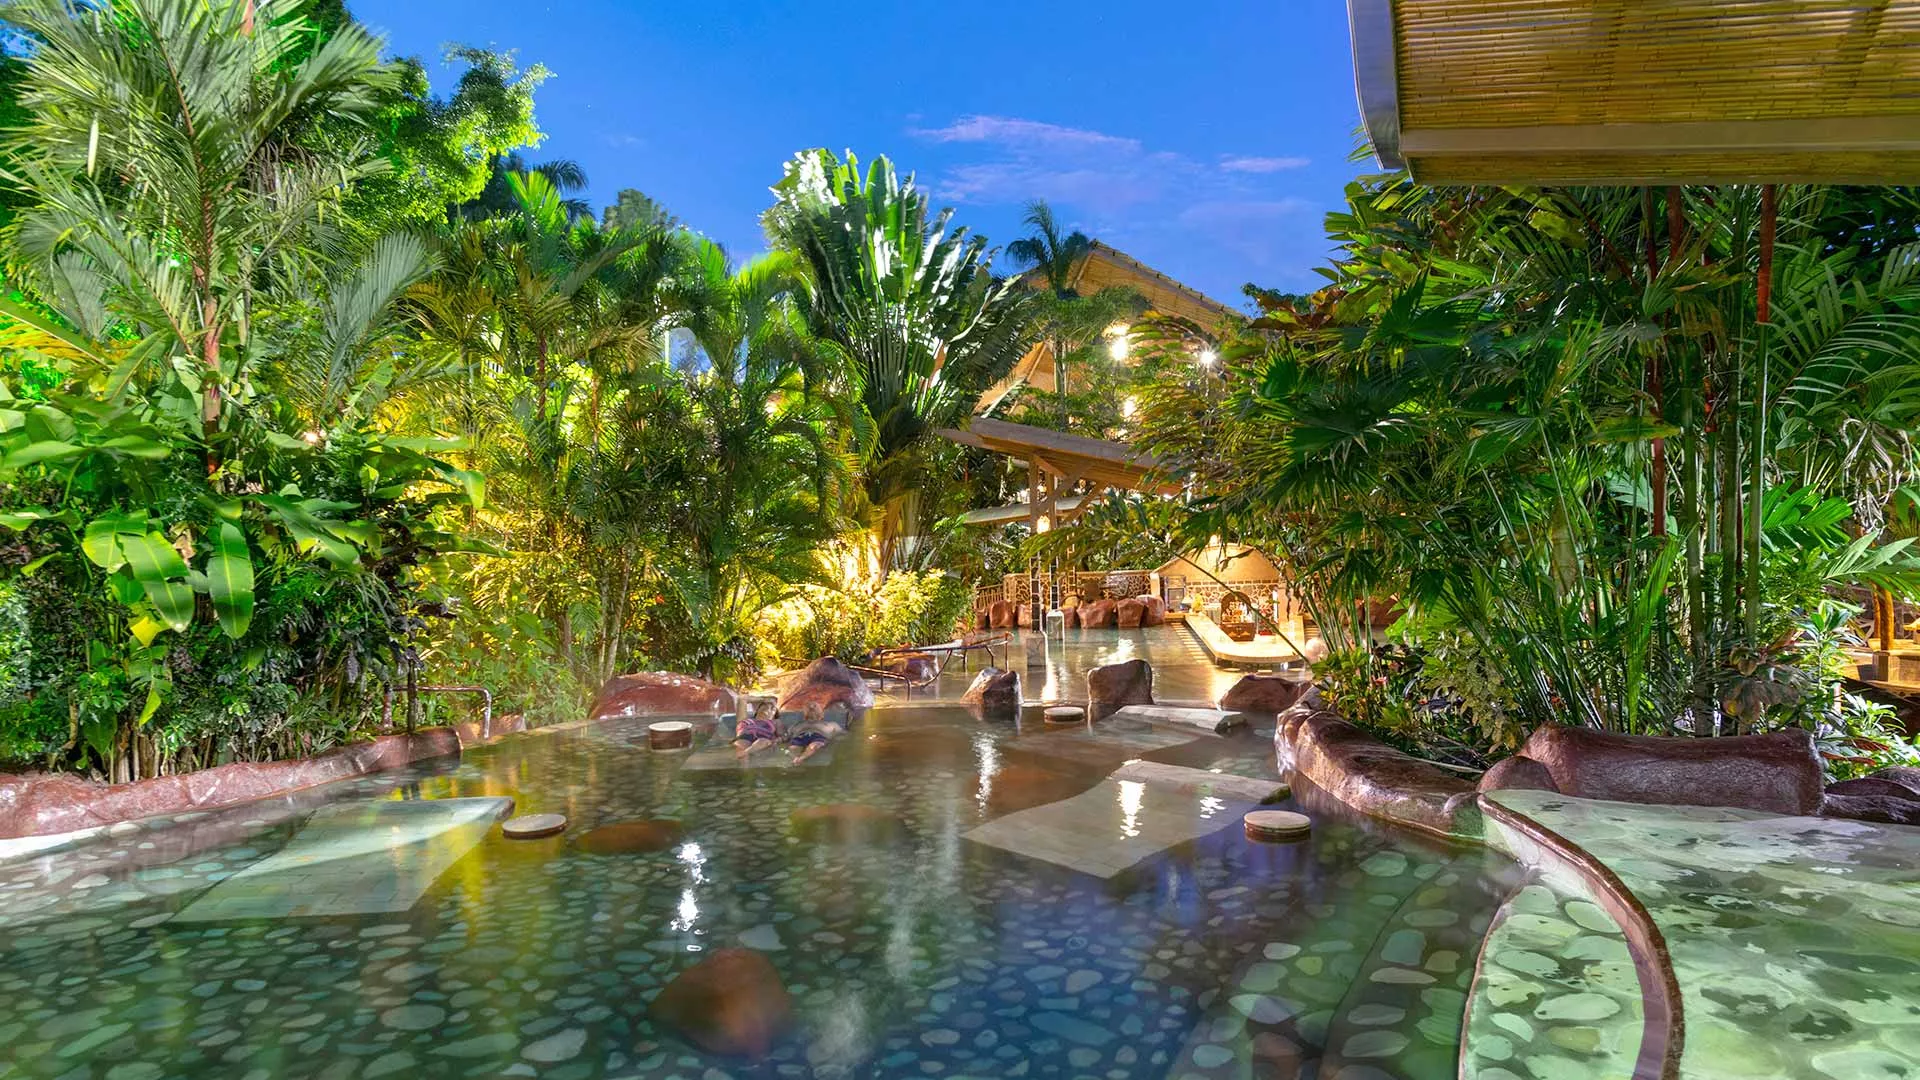 Baldi Hot Springs Resort Hotel & Spa in Costa Rica, North America | Hot Springs & Pools,SPAs - Rated 4.5